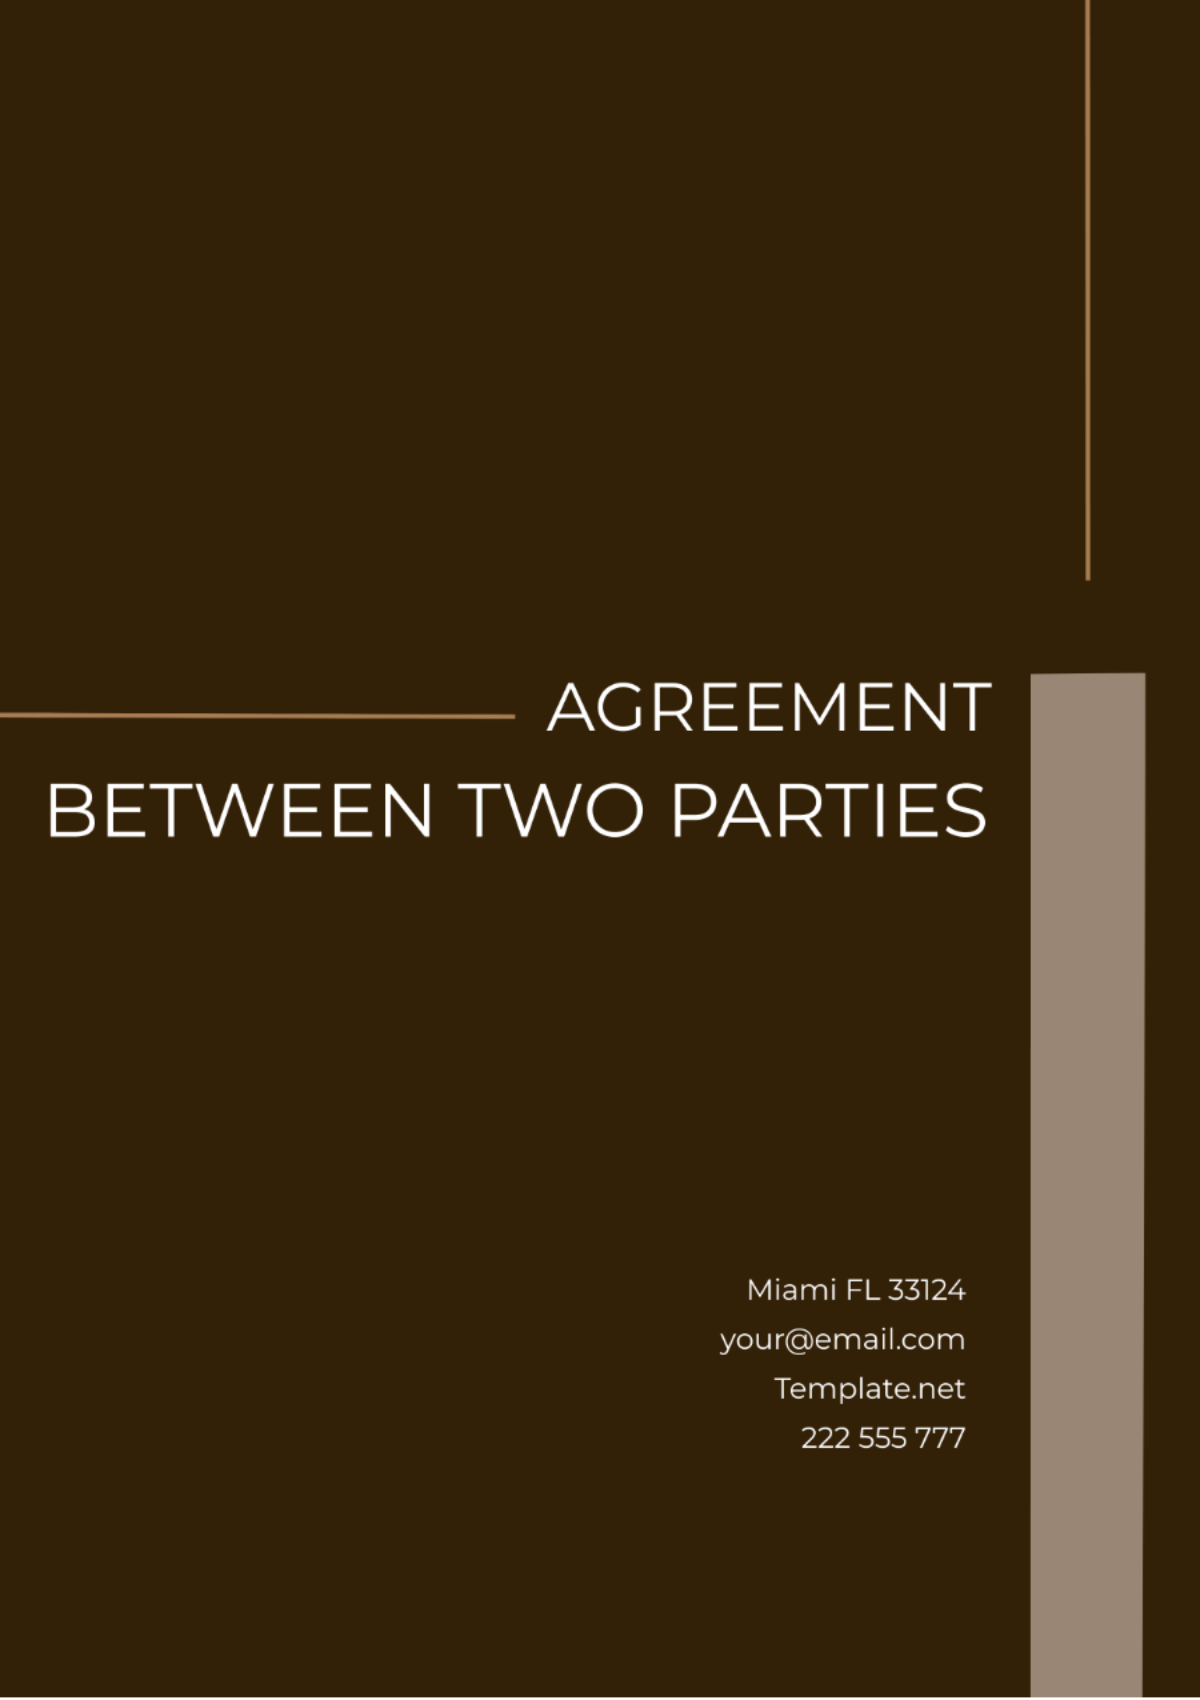 Agreement between Two Parties Template